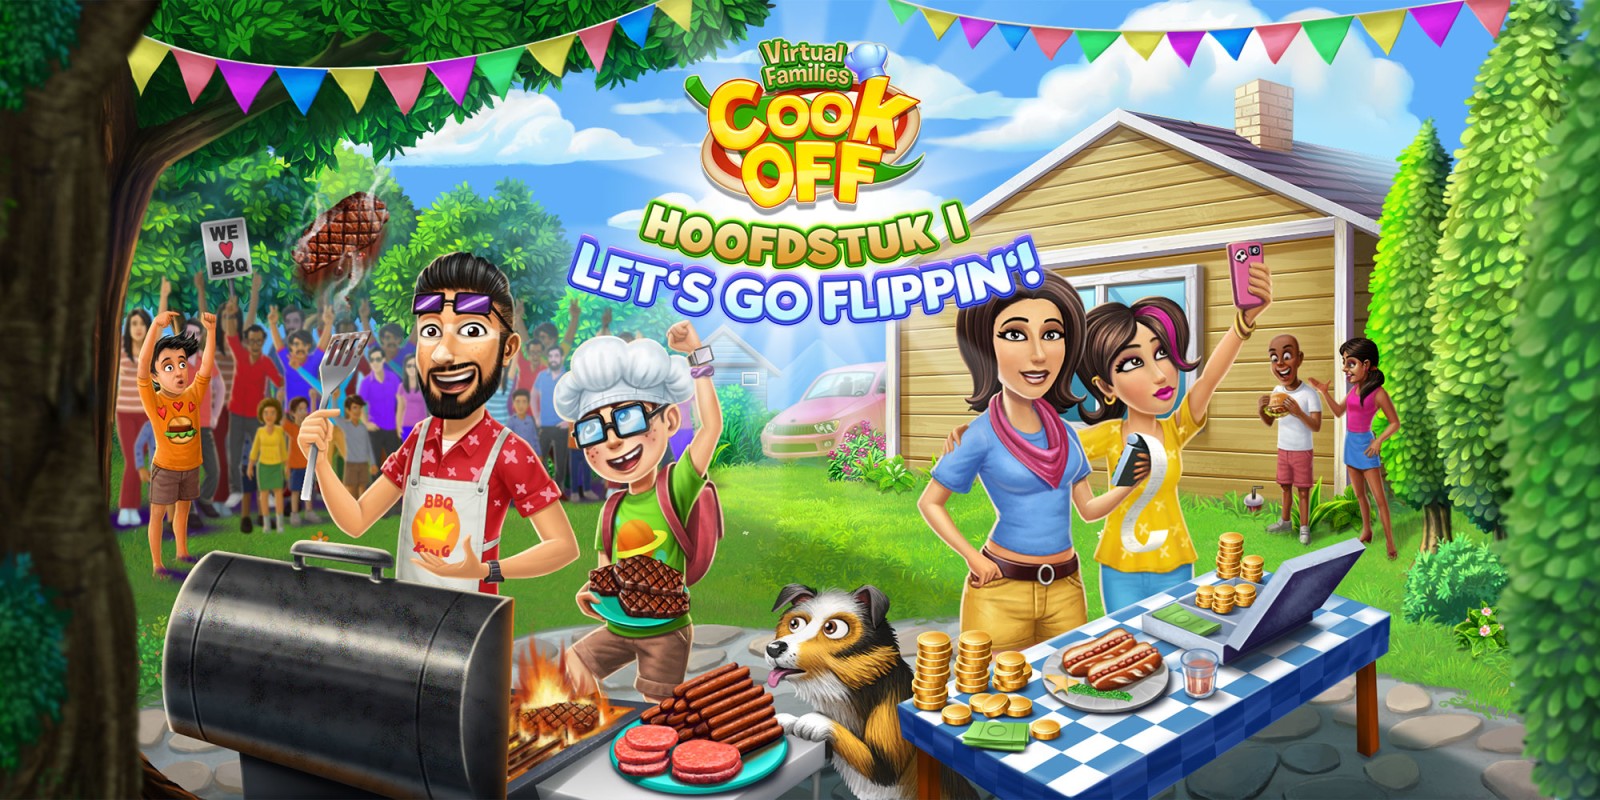 Virtual Families Cook Off: Hoofdstuk 1 Let's Go Flippin'